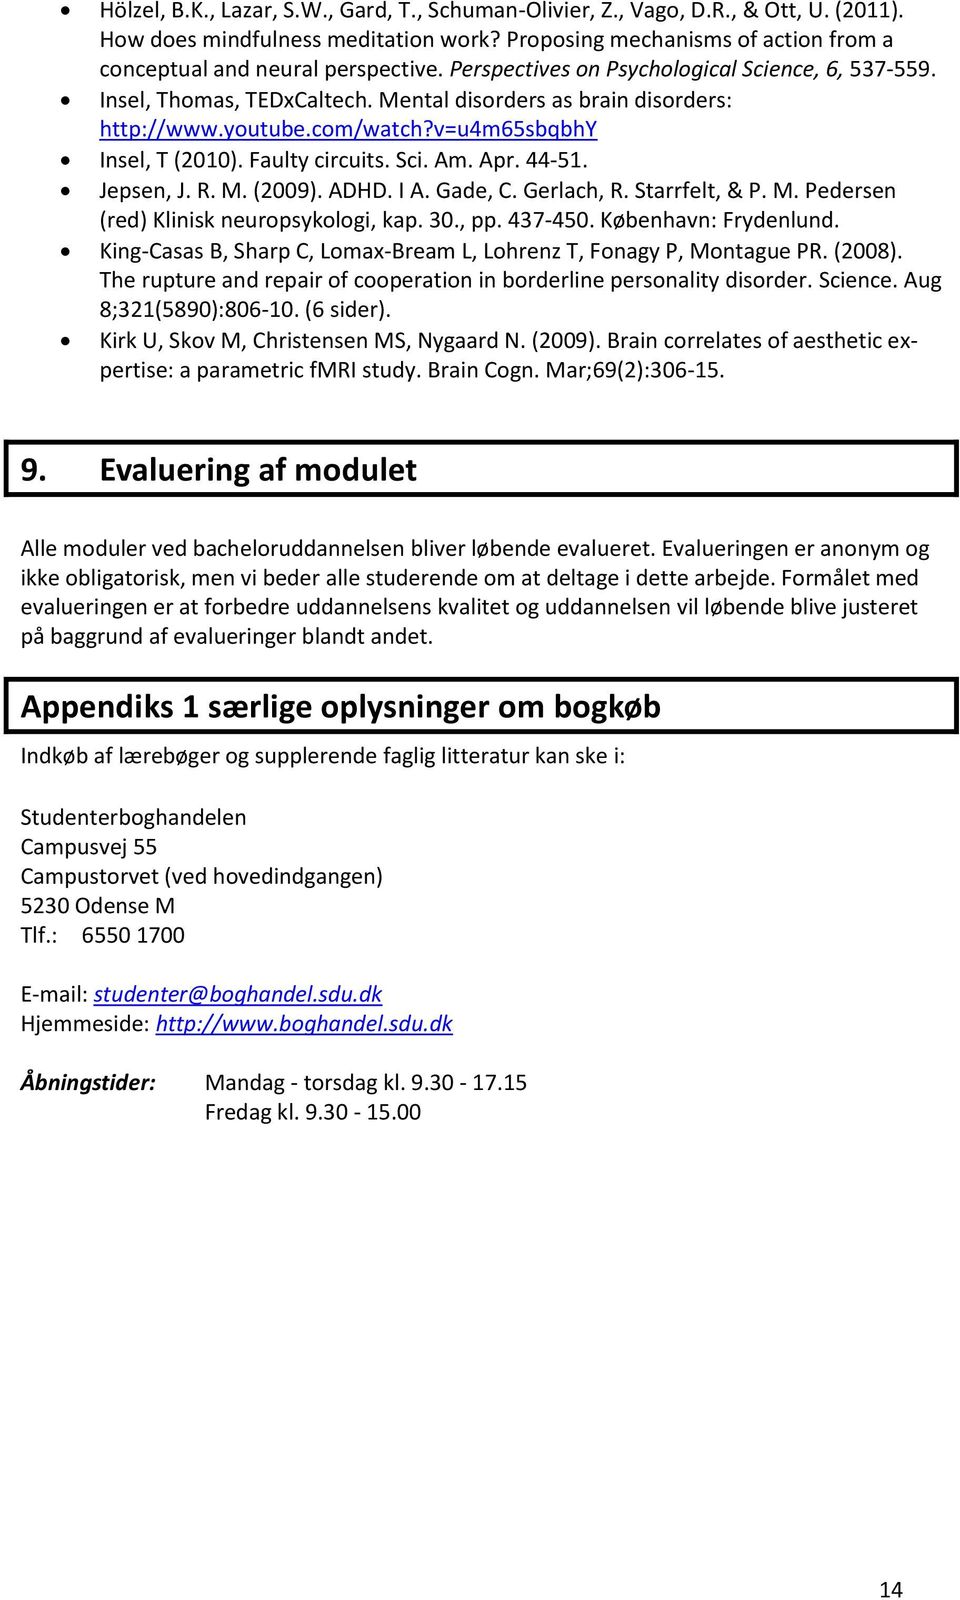 Apr. 44-51. Jepsen, J. R. M. (2009). ADHD. I A. Gade, C. Gerlach, R. Starrfelt, & P. M. Pedersen (red) Klinisk neuropsykologi, kap. 30., pp. 437-450. København: Frydenlund.